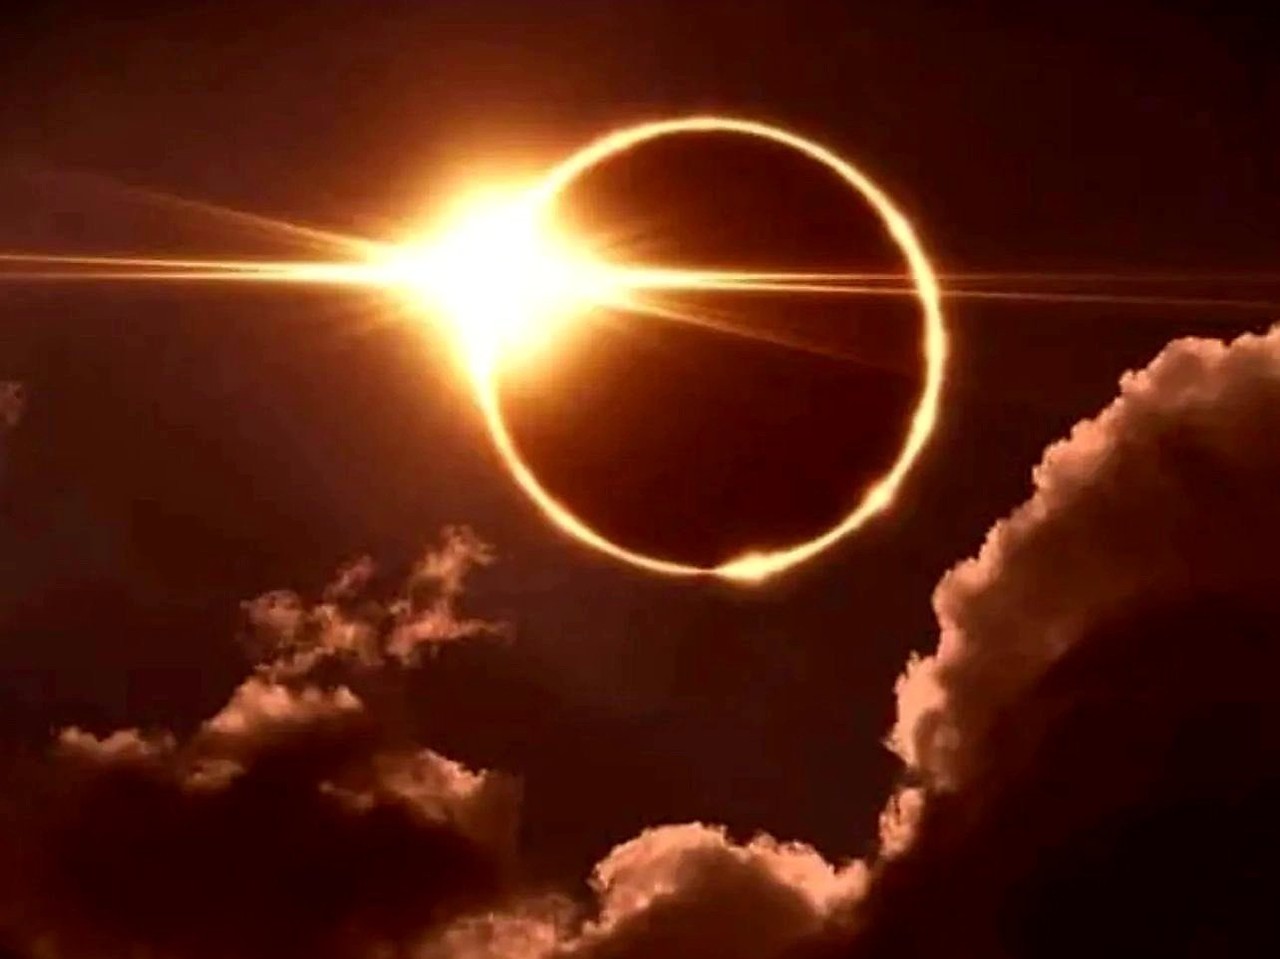 En el Estado de México el eclipse total de Sol se podrá observar a partir de las 10: 54 horas. Foto: X @DanielJ23480098